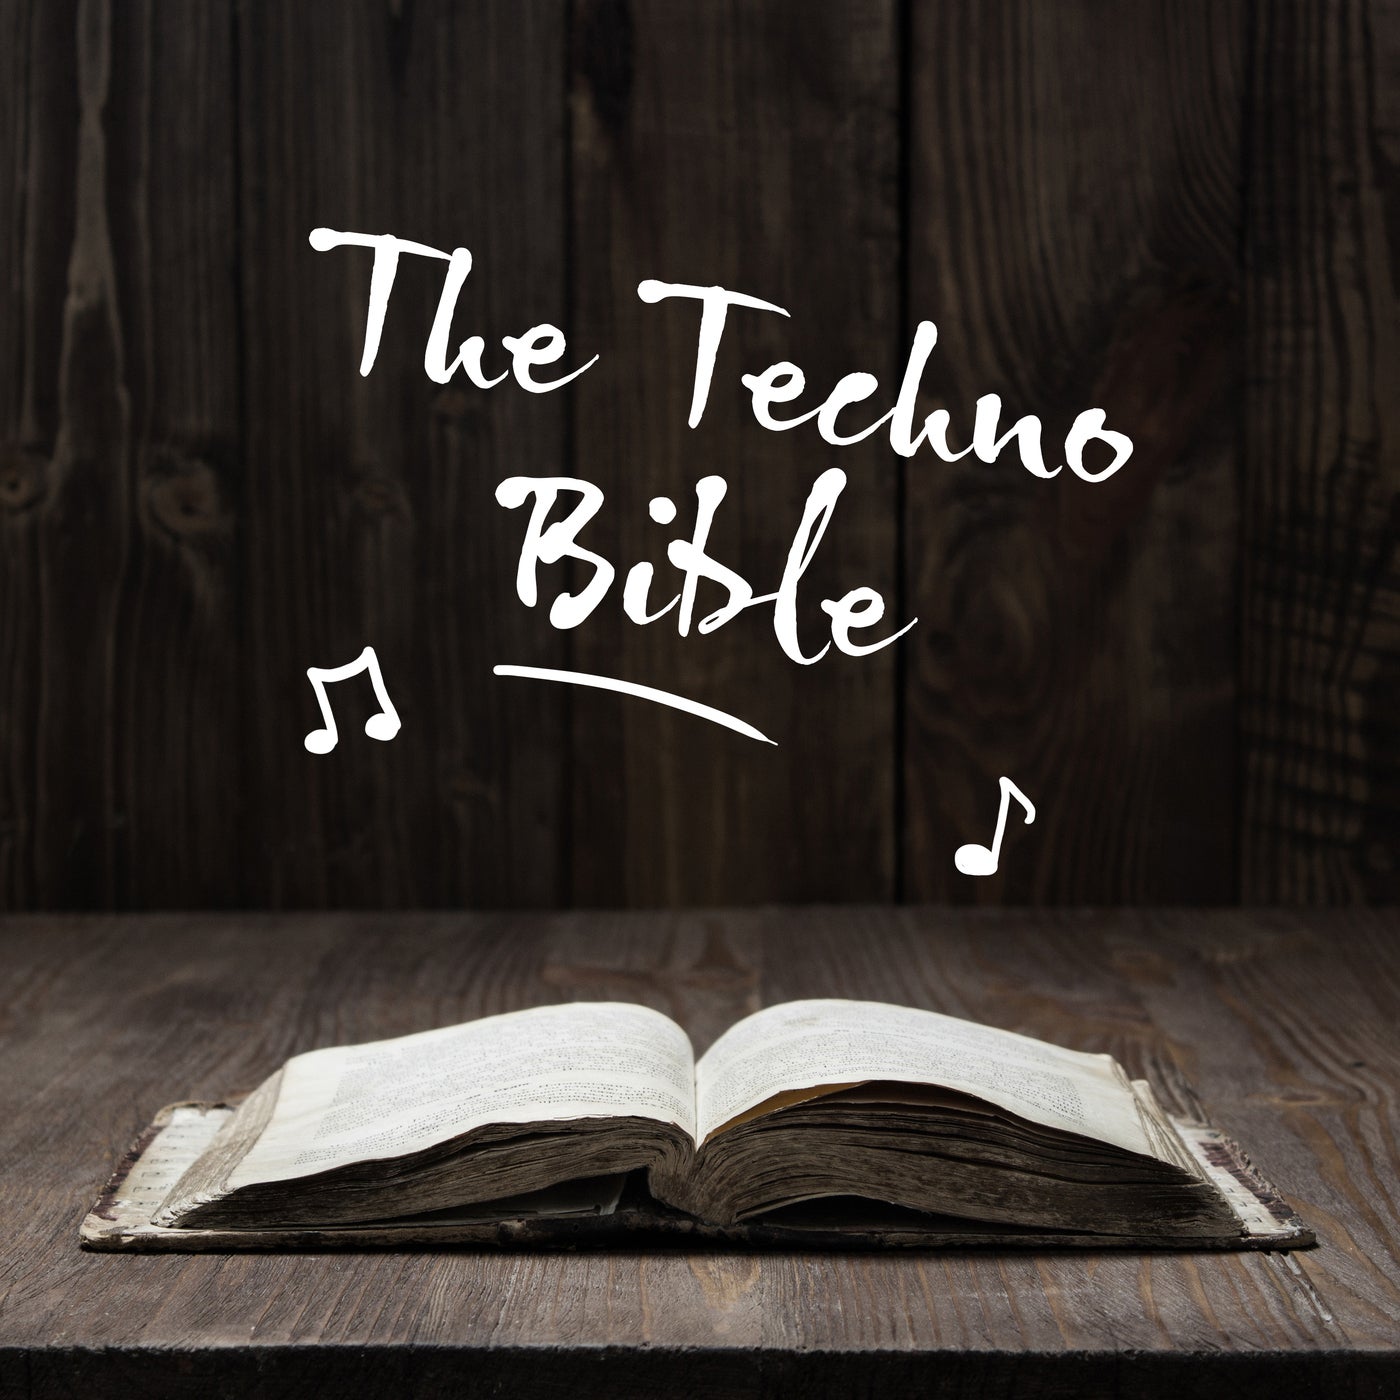 The Techno Bible